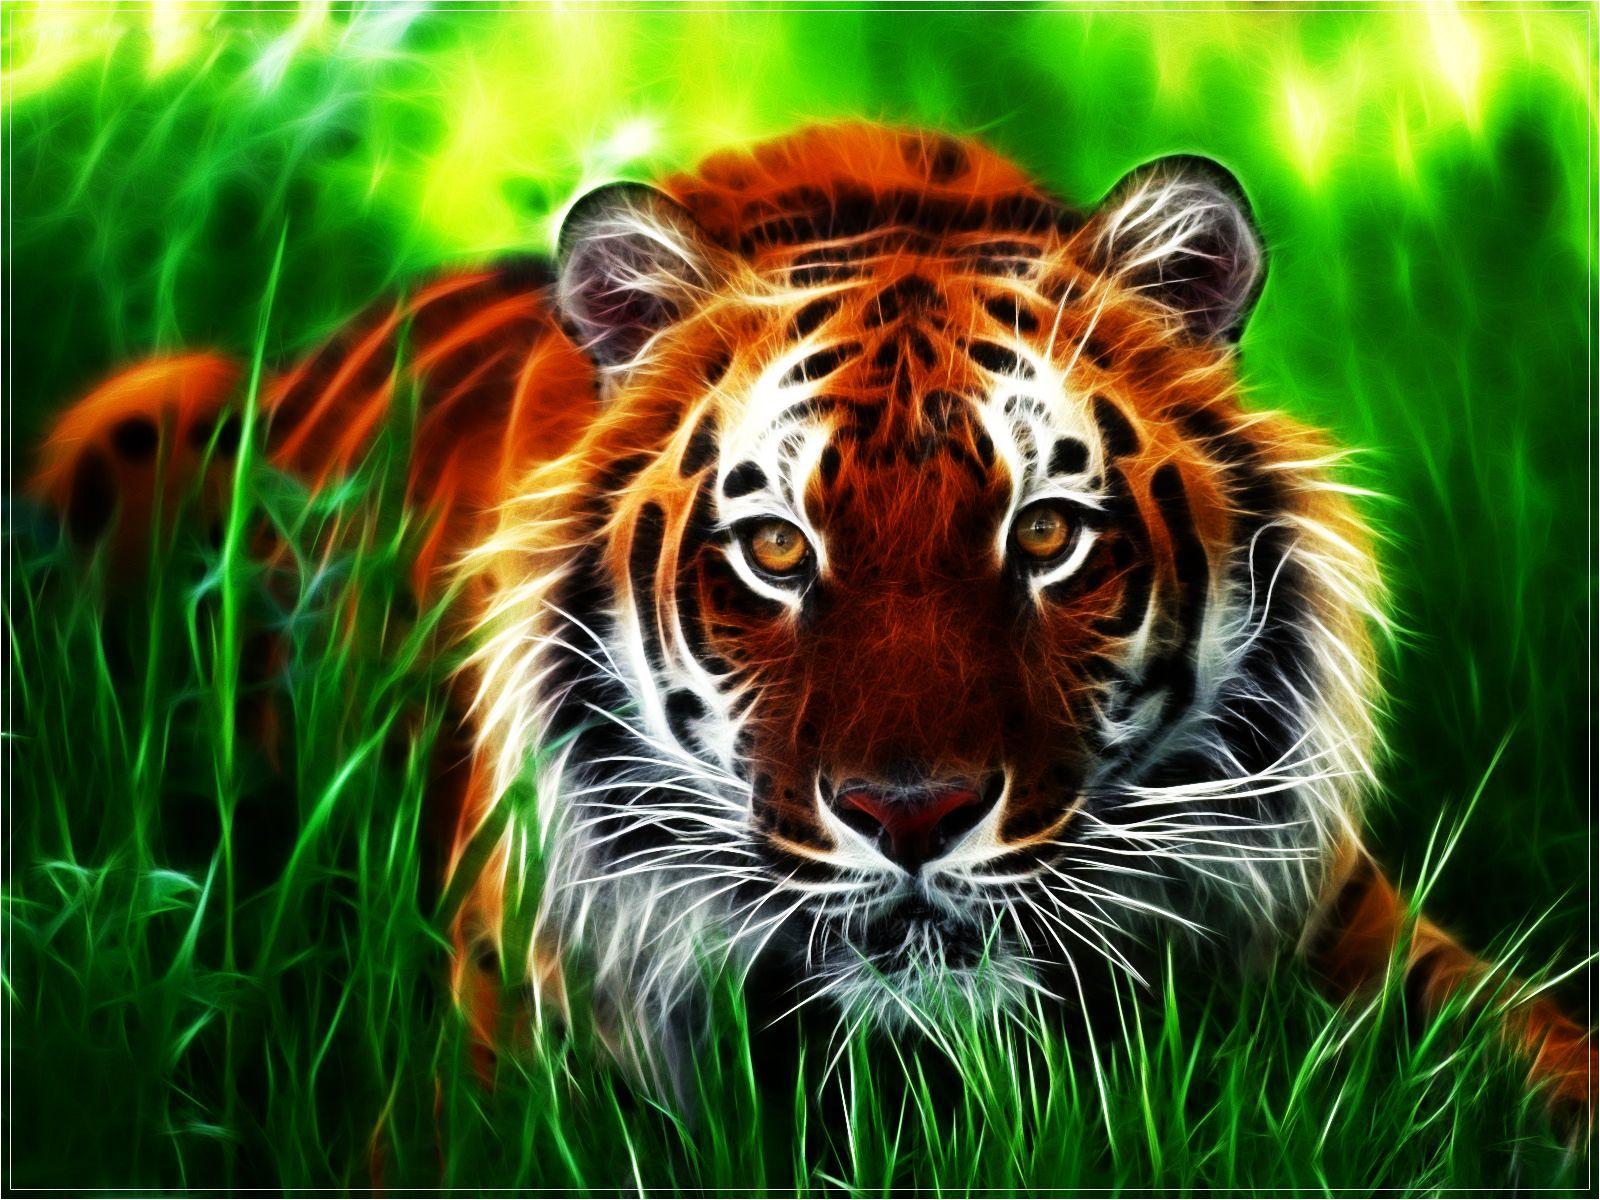 Tiger Wallpaper. Tiger wallpaper, Tiger picture